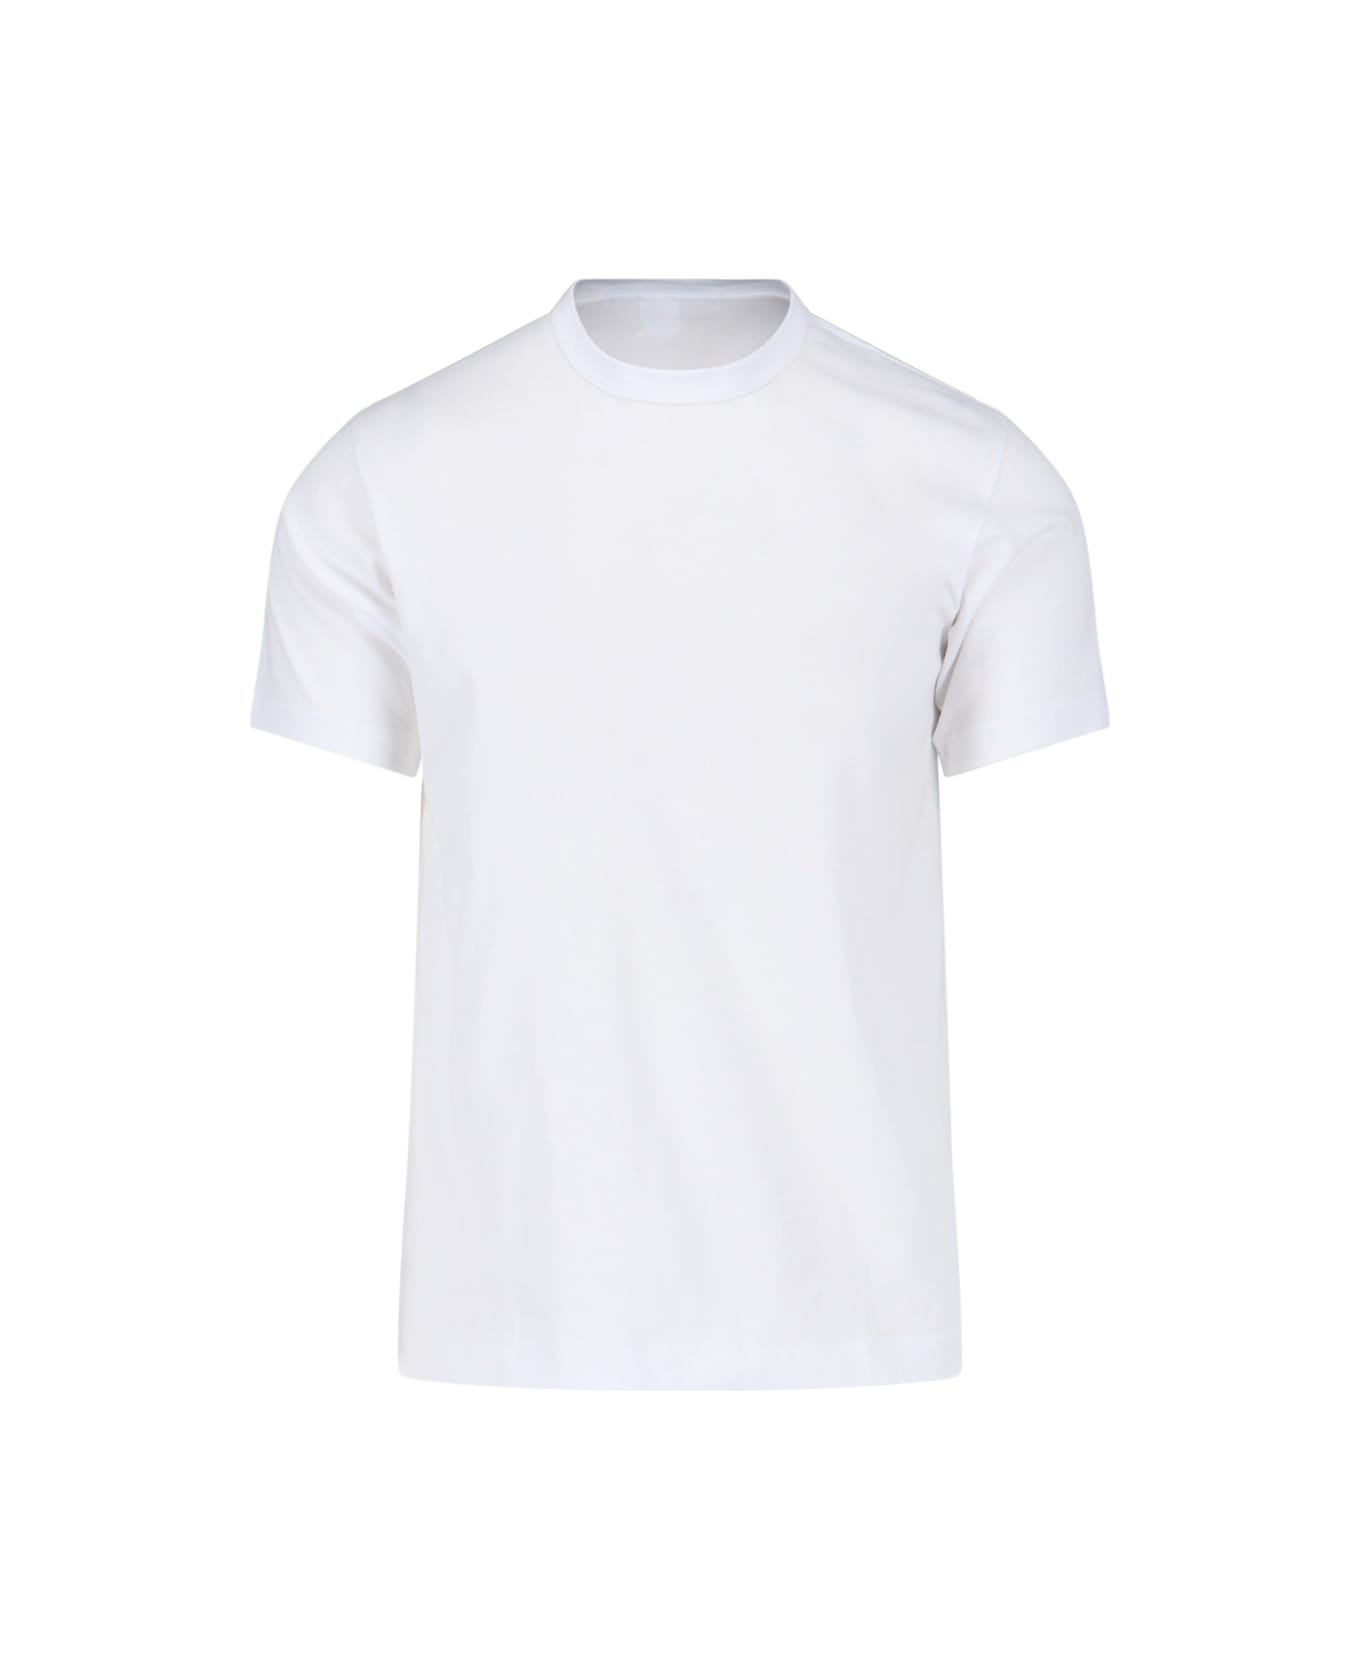 Comme des Garçons Basic T-shirt - White